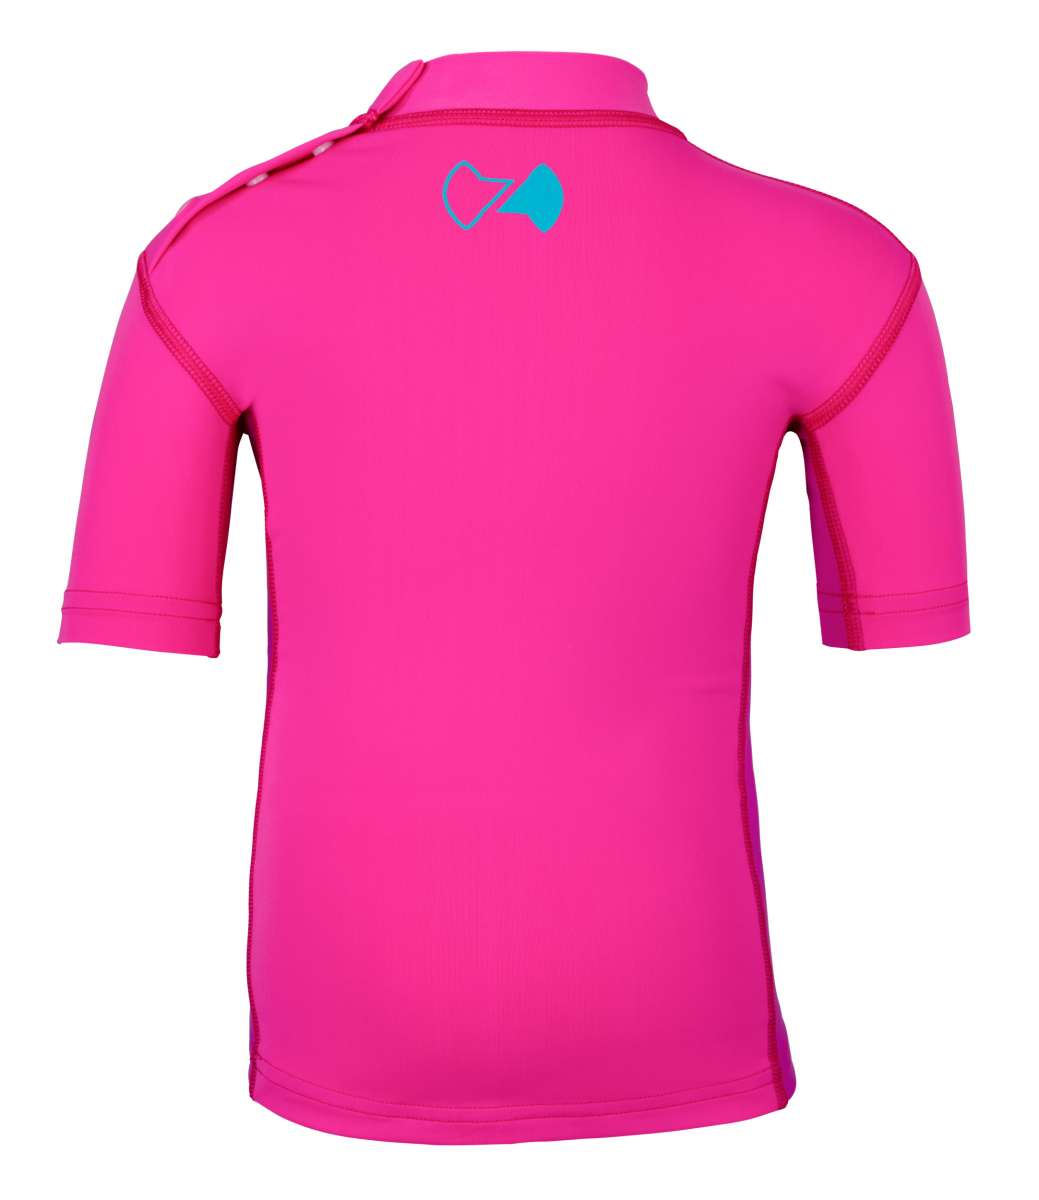 UV Shirt ’myo magli / baton rouge‘ back view 